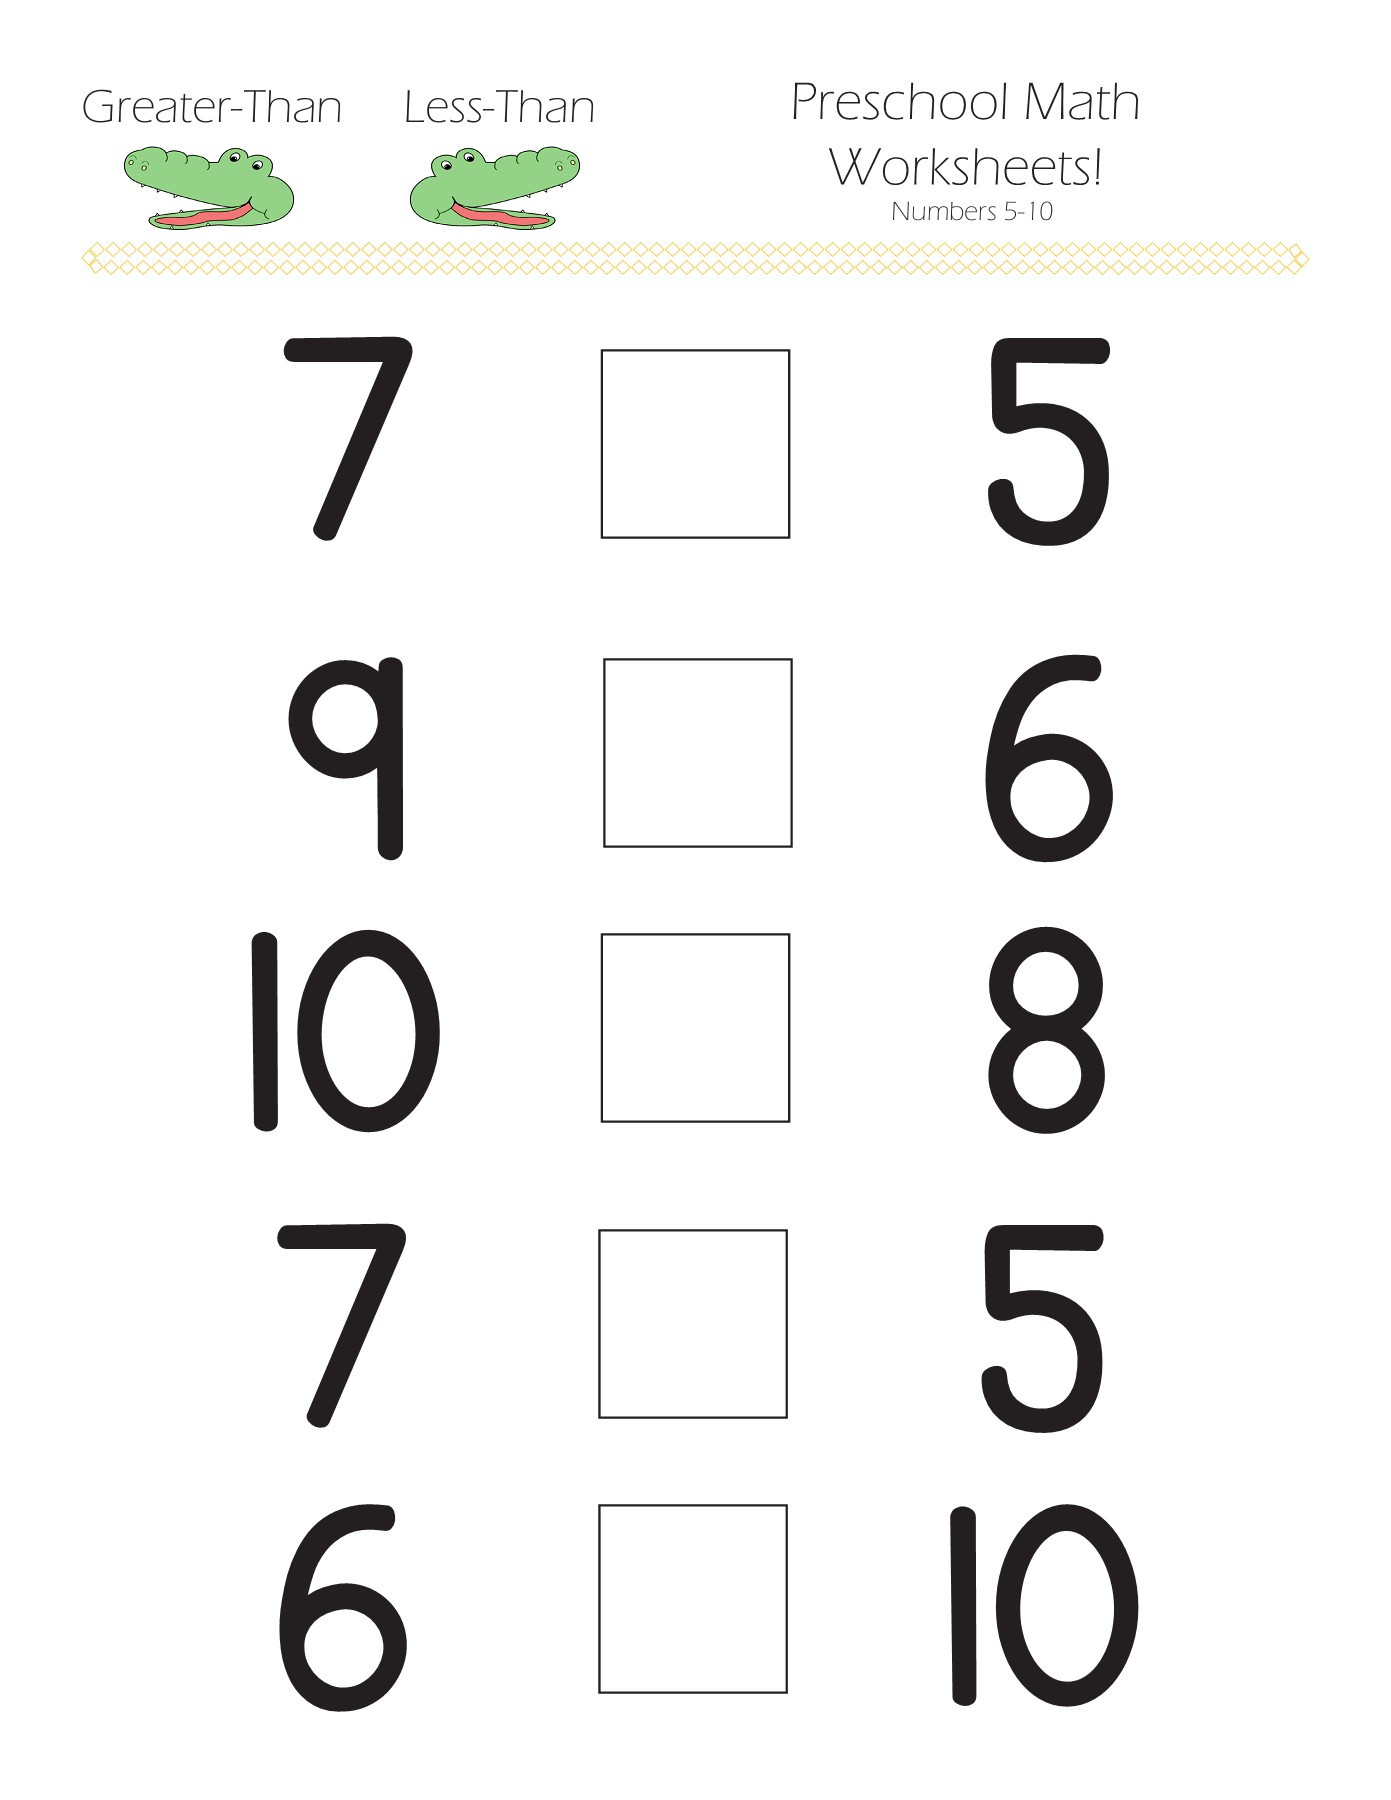 Preschool Math Worksheets Greater Than Less Than Preschool Math Worksheets